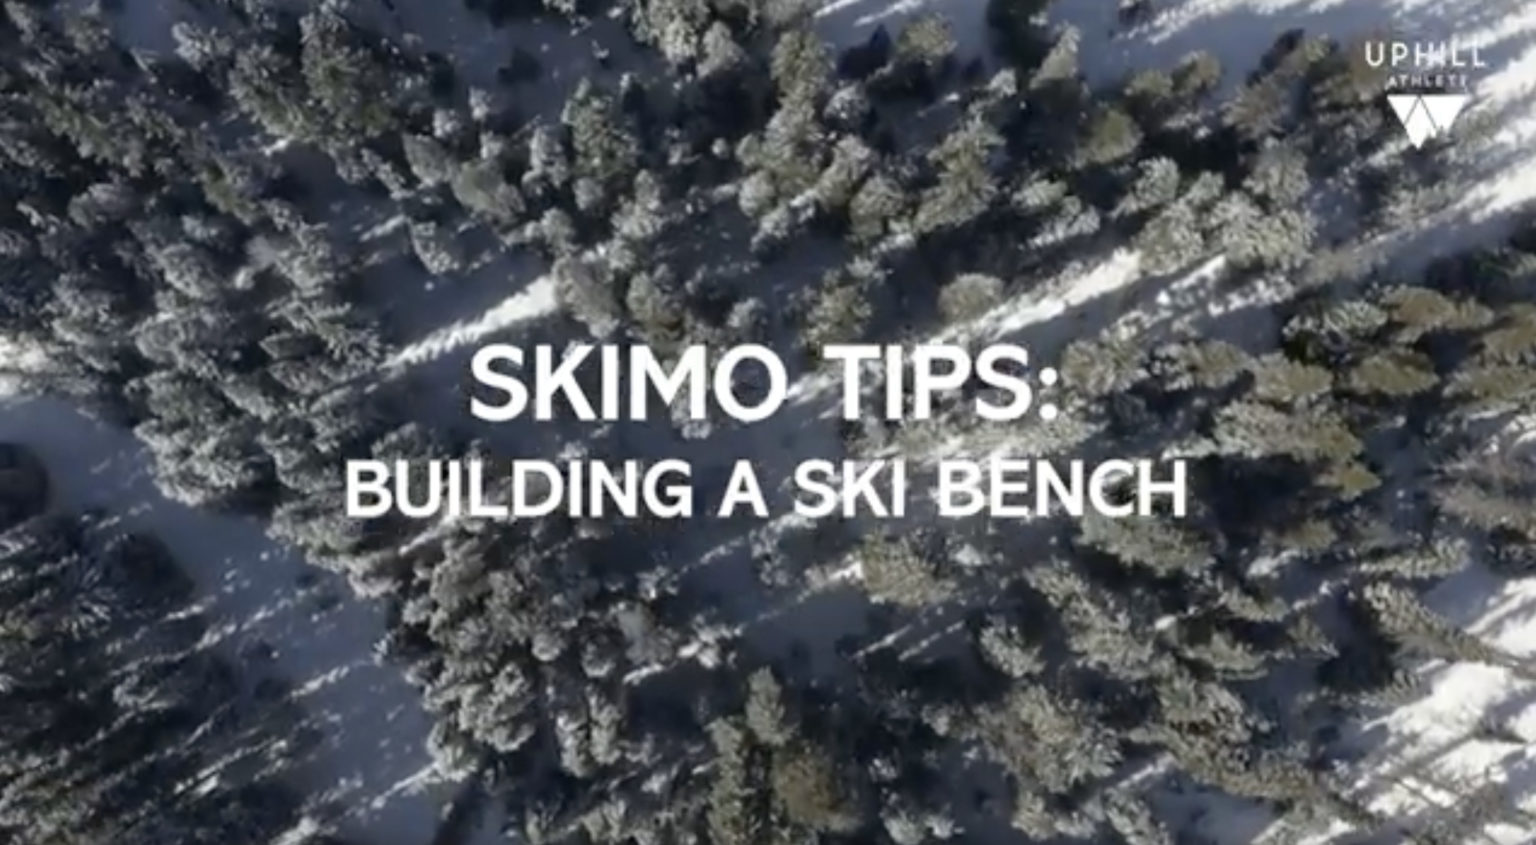 DIY Ski Bench touring skimo